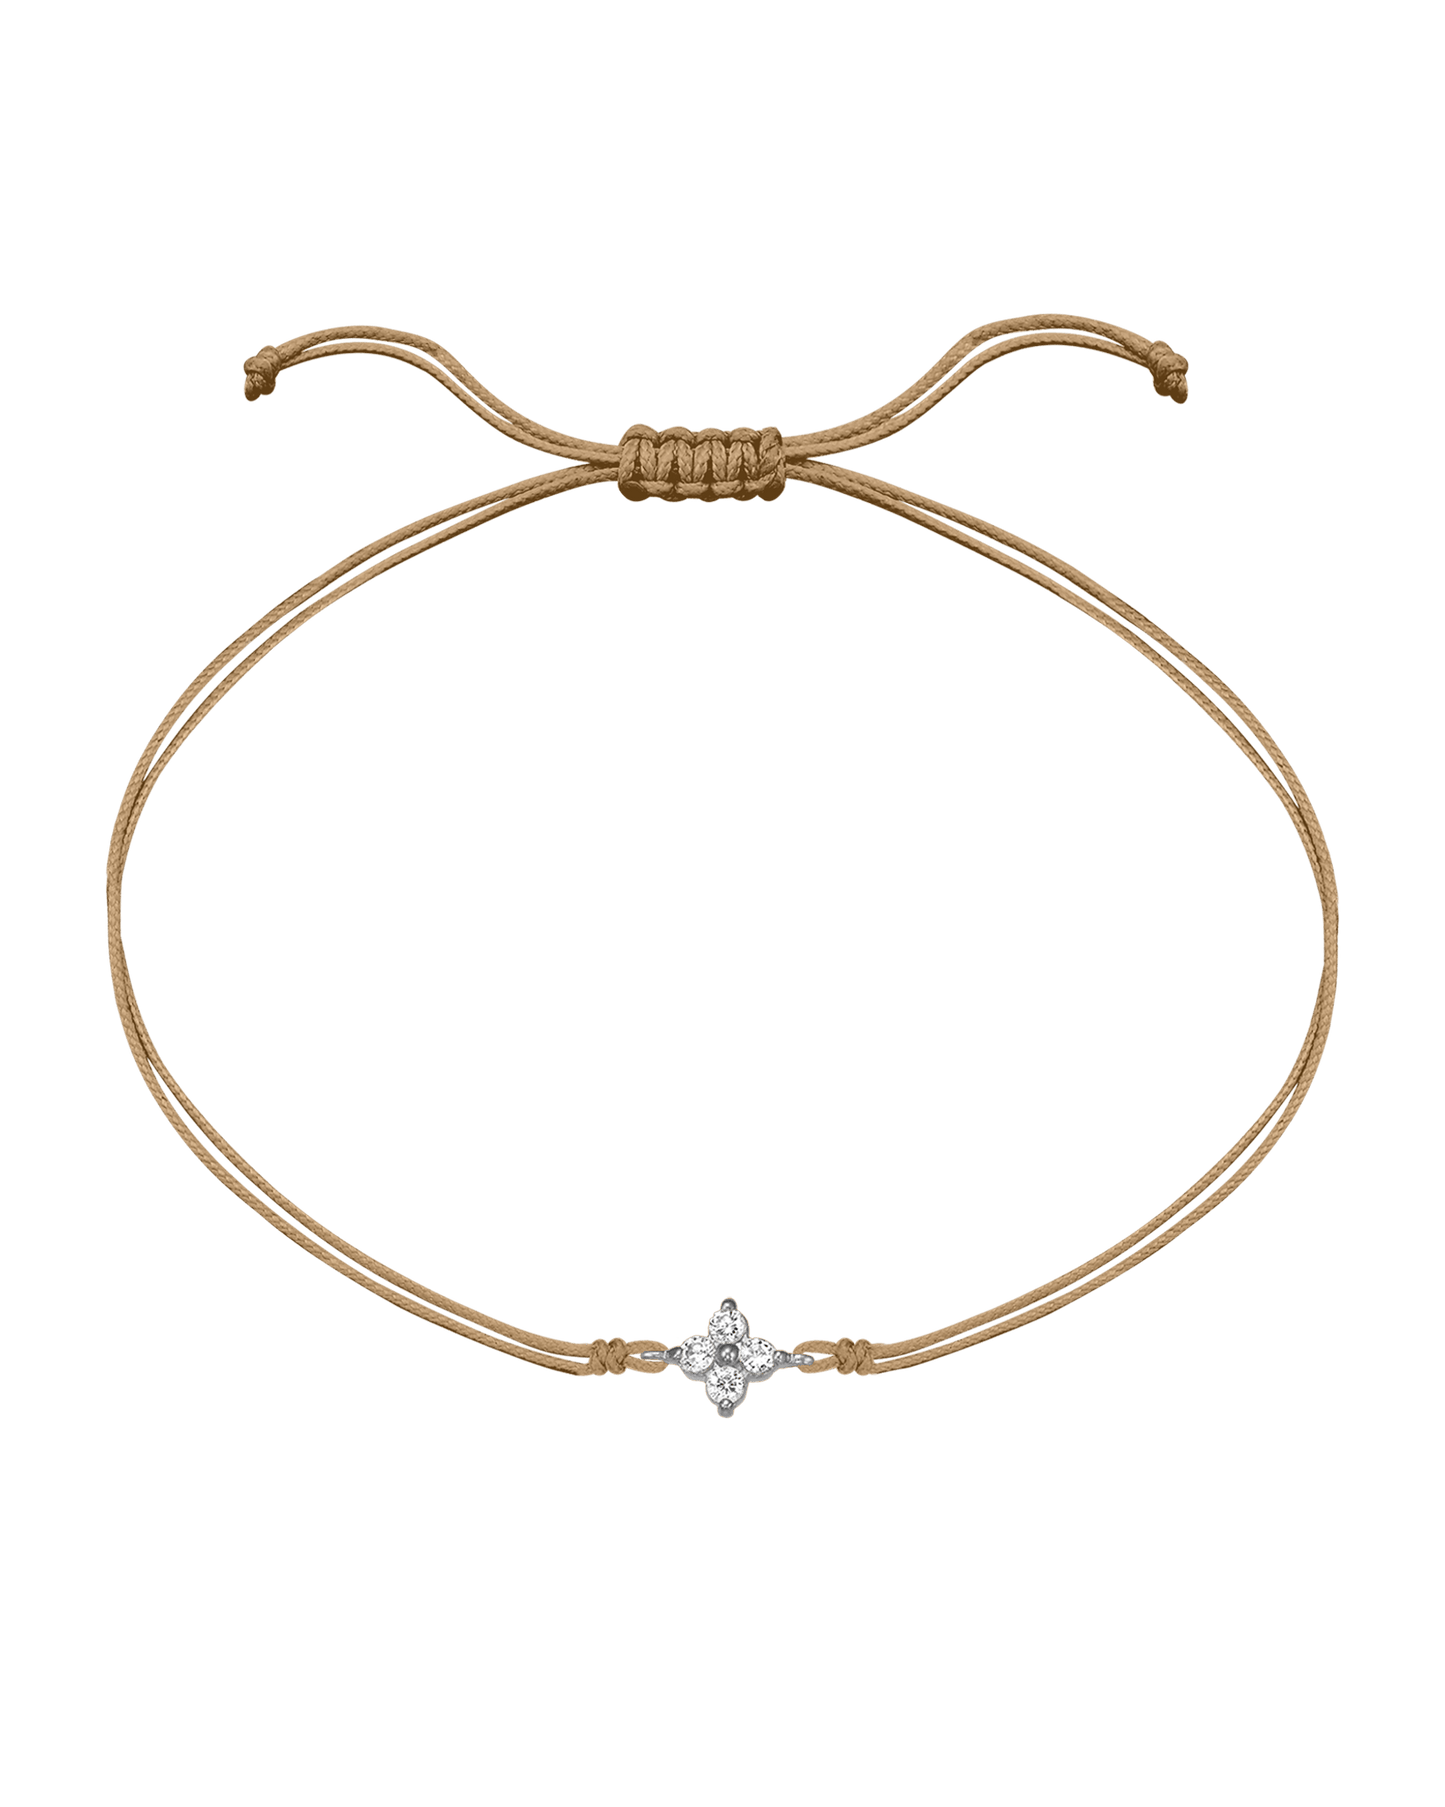 4 Studs Diamond String of love - 14K White Gold Bracelets 14K Solid Gold Camel 